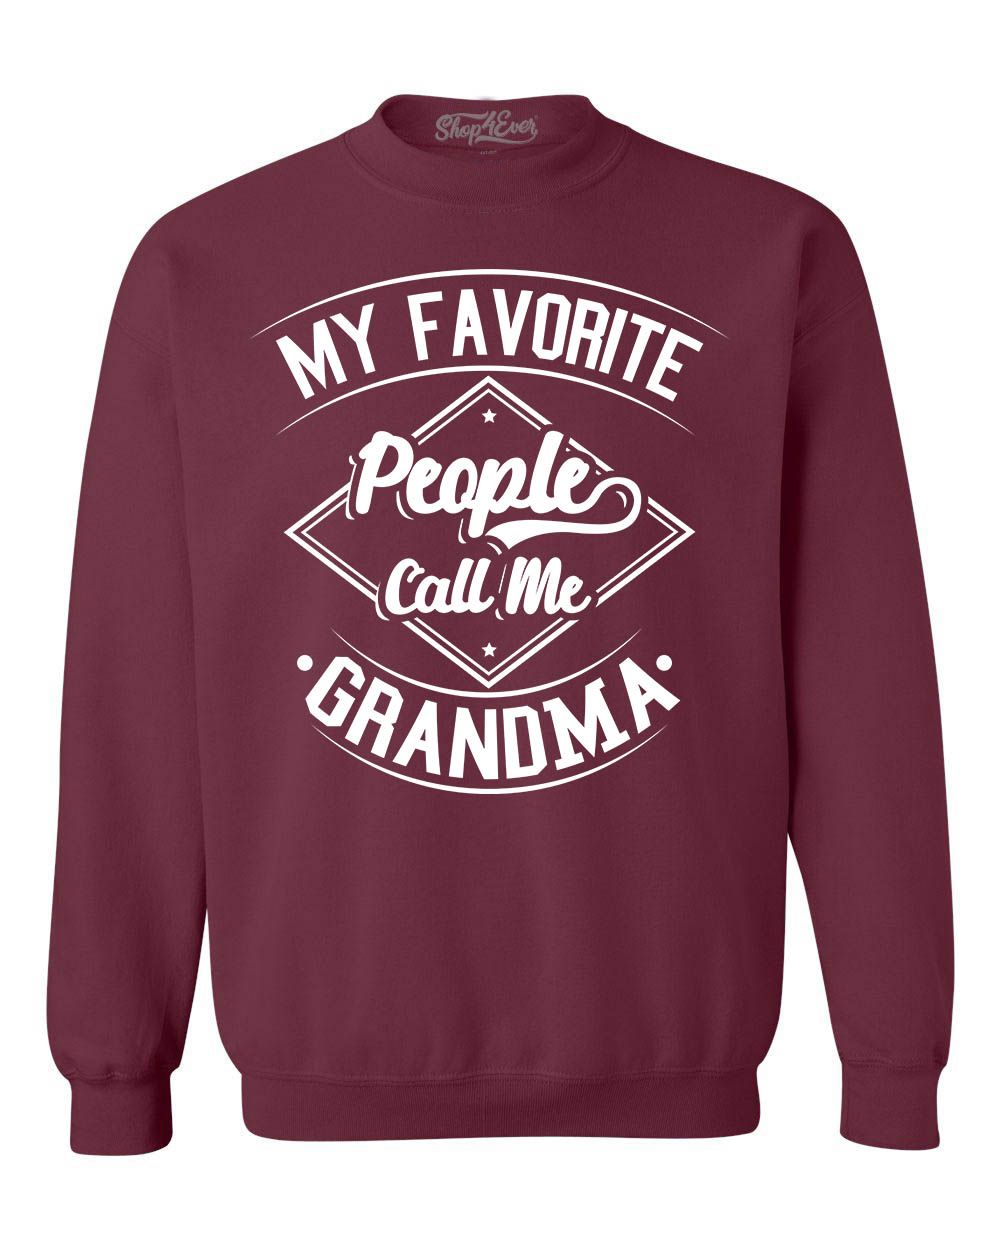 Shop4Ever Men's My Favorite People Call Me Grandma Crewneck Sweatshirt X-Large Maroon - image 1 of 5